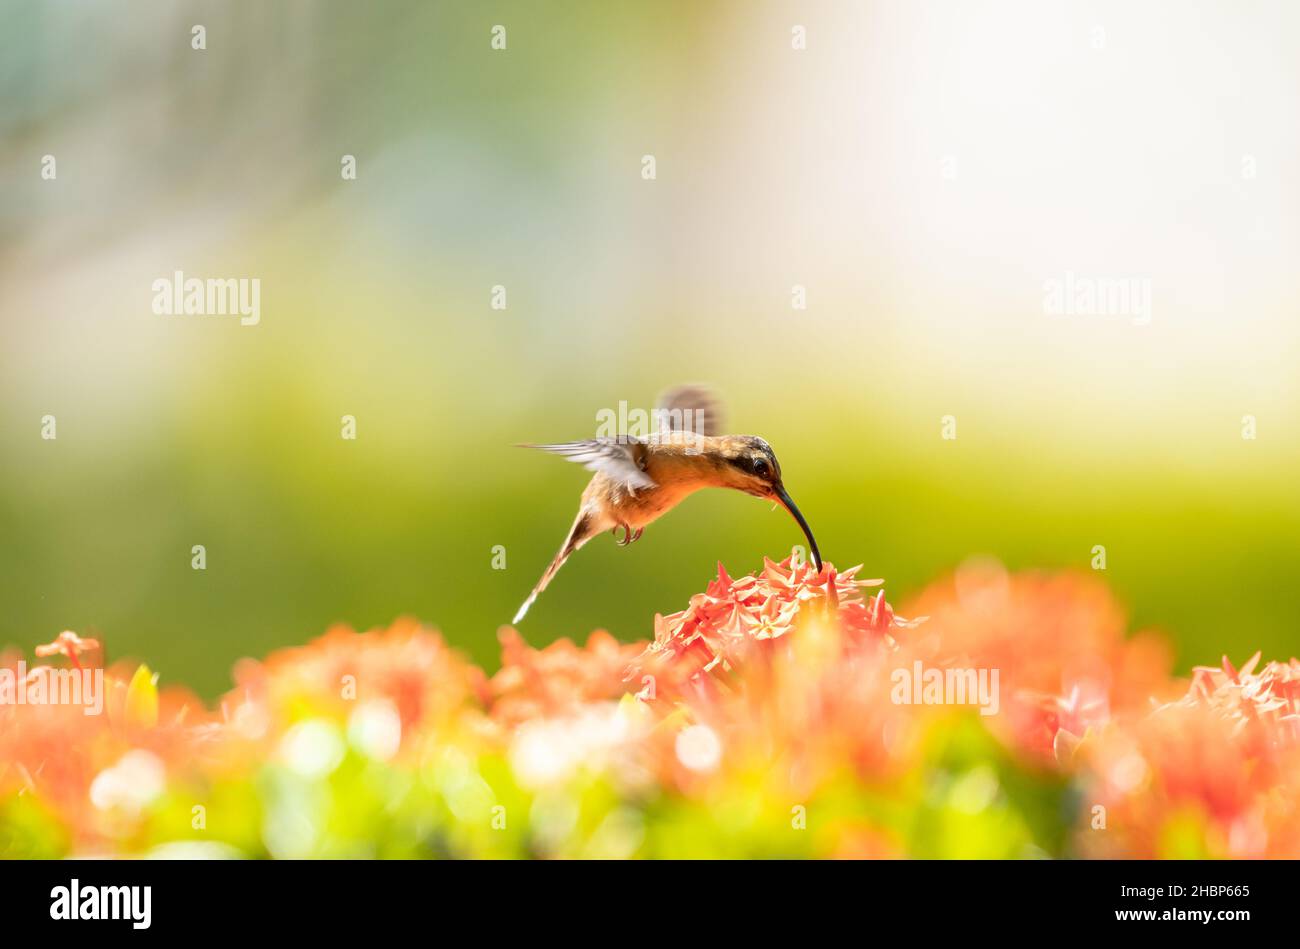 Small brown Little Hermit hummingbird, Phaethornis longuemareus, feeding on an orange Ixora hedge in warm sunlight with a light background. Stock Photo